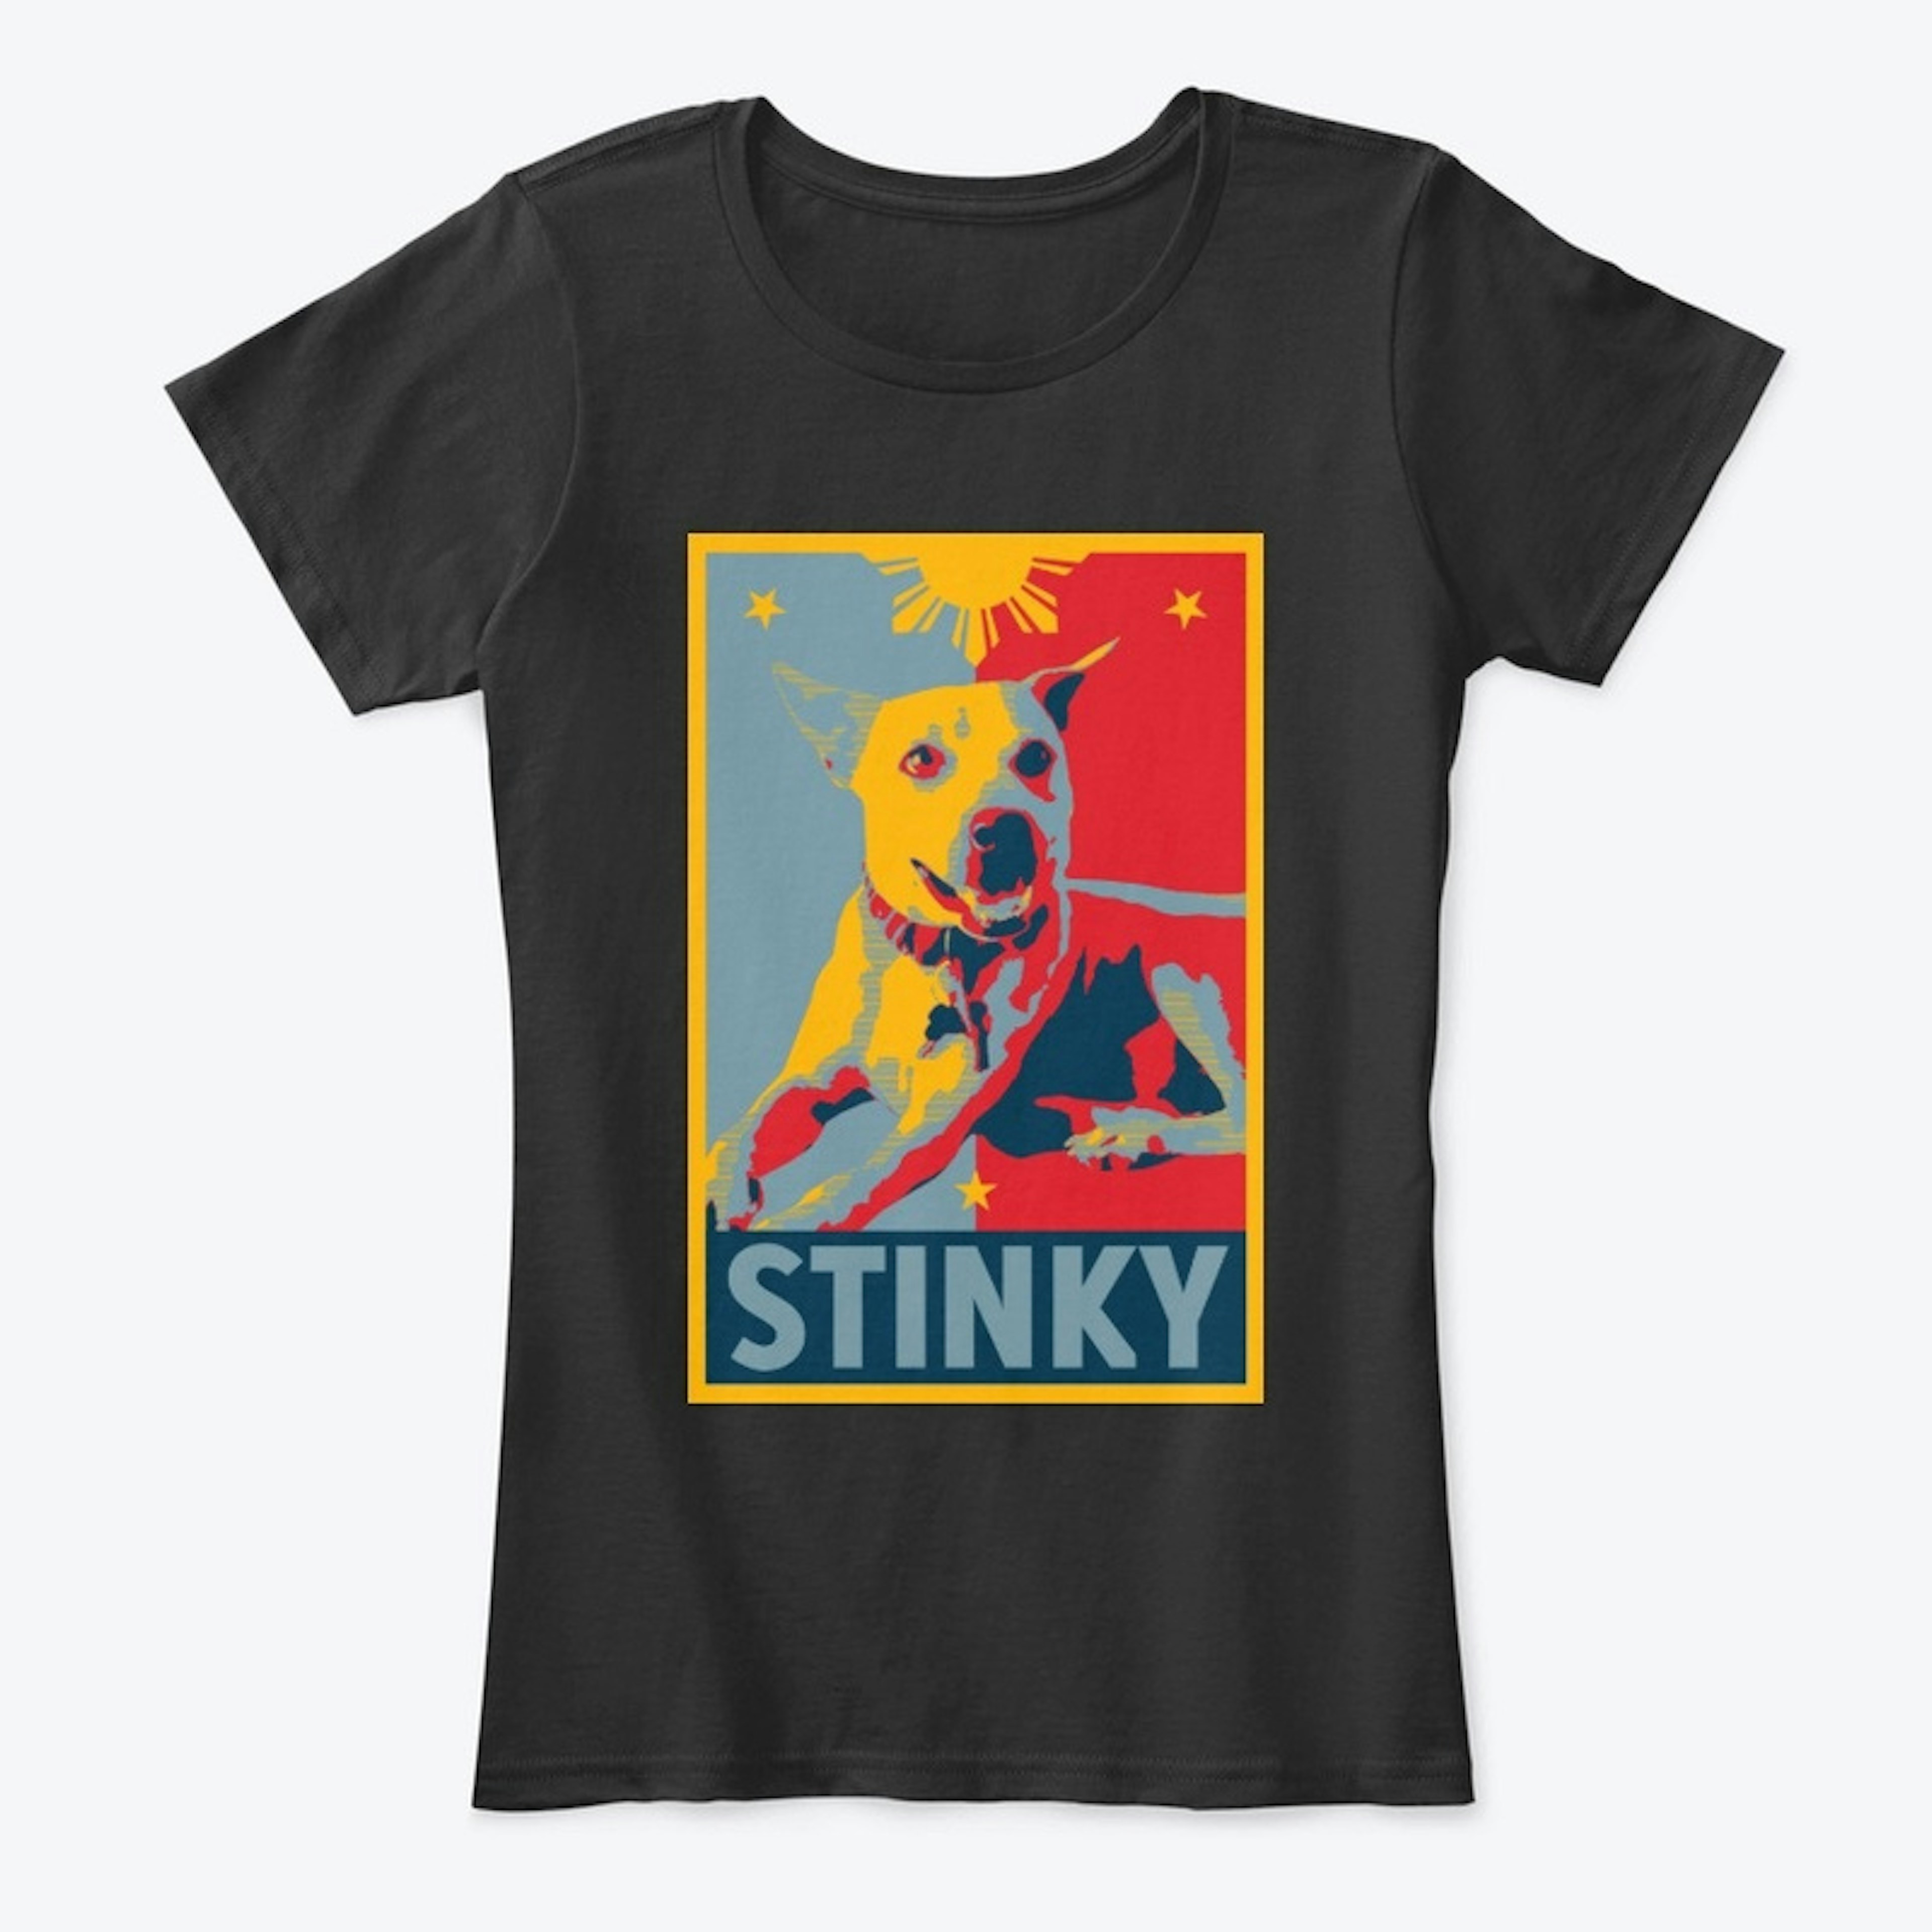 Stinky - King of Alona